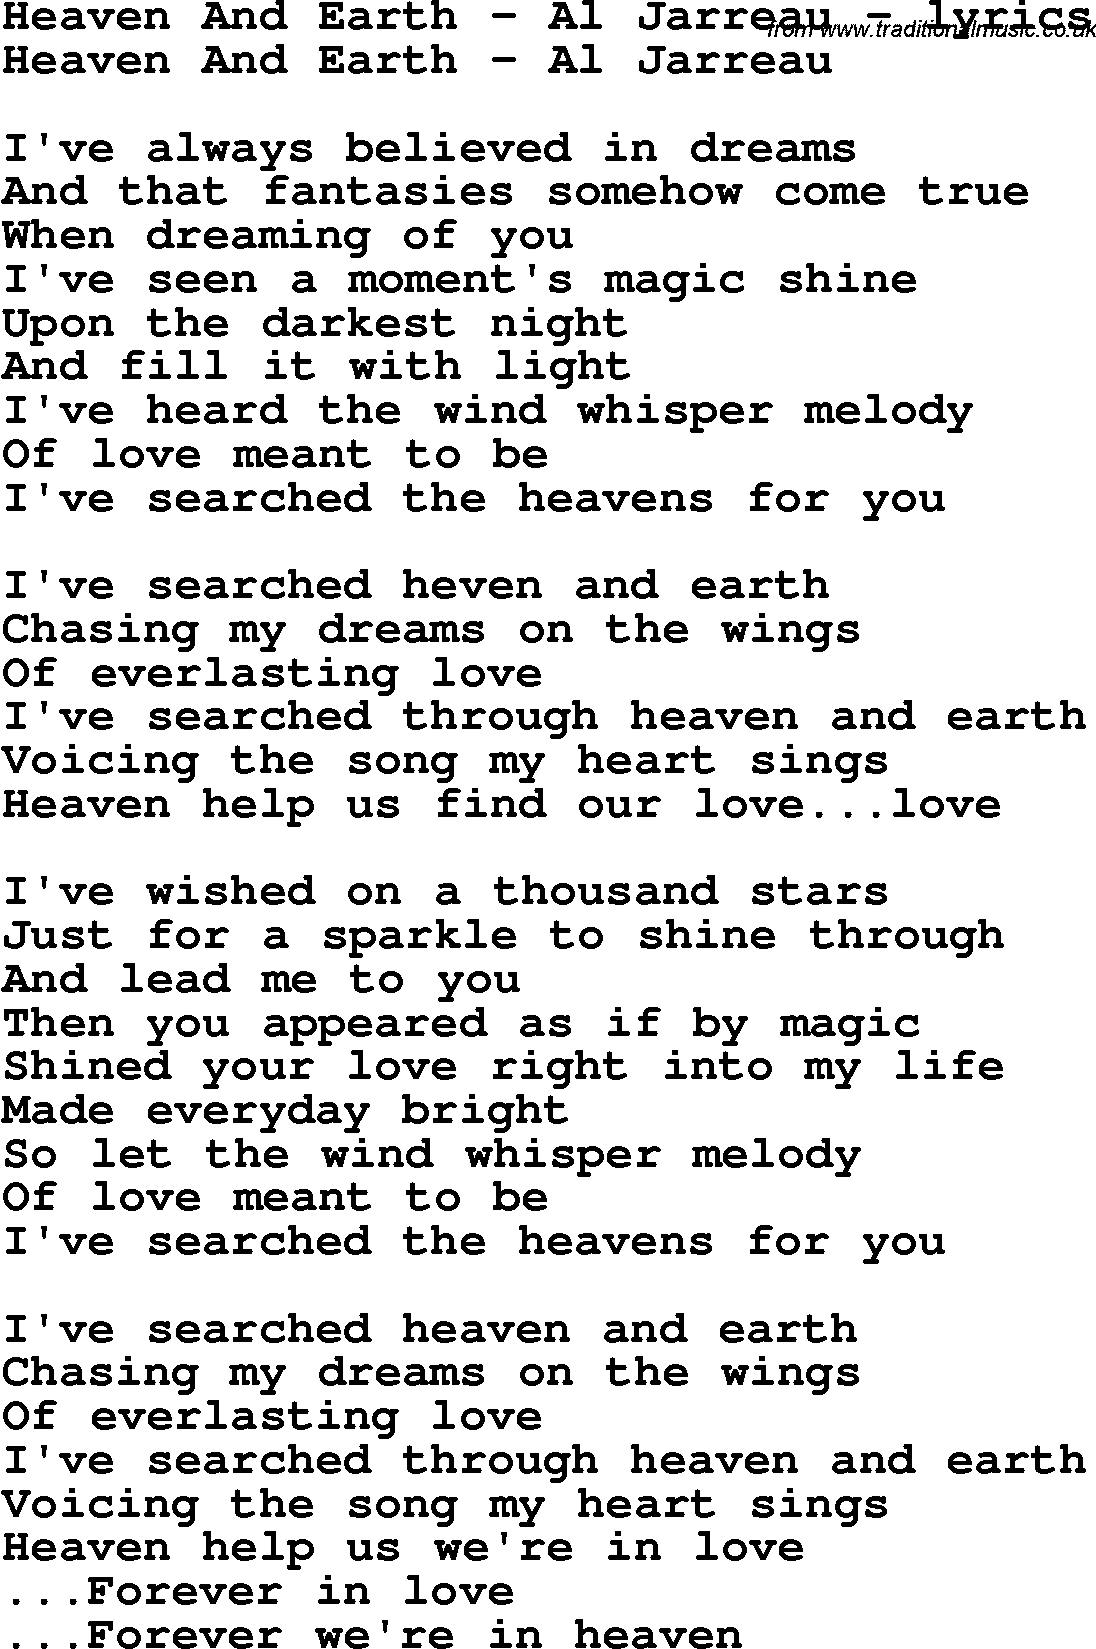 Love Song Lyrics for: Heaven And Earth - Al Jarreau